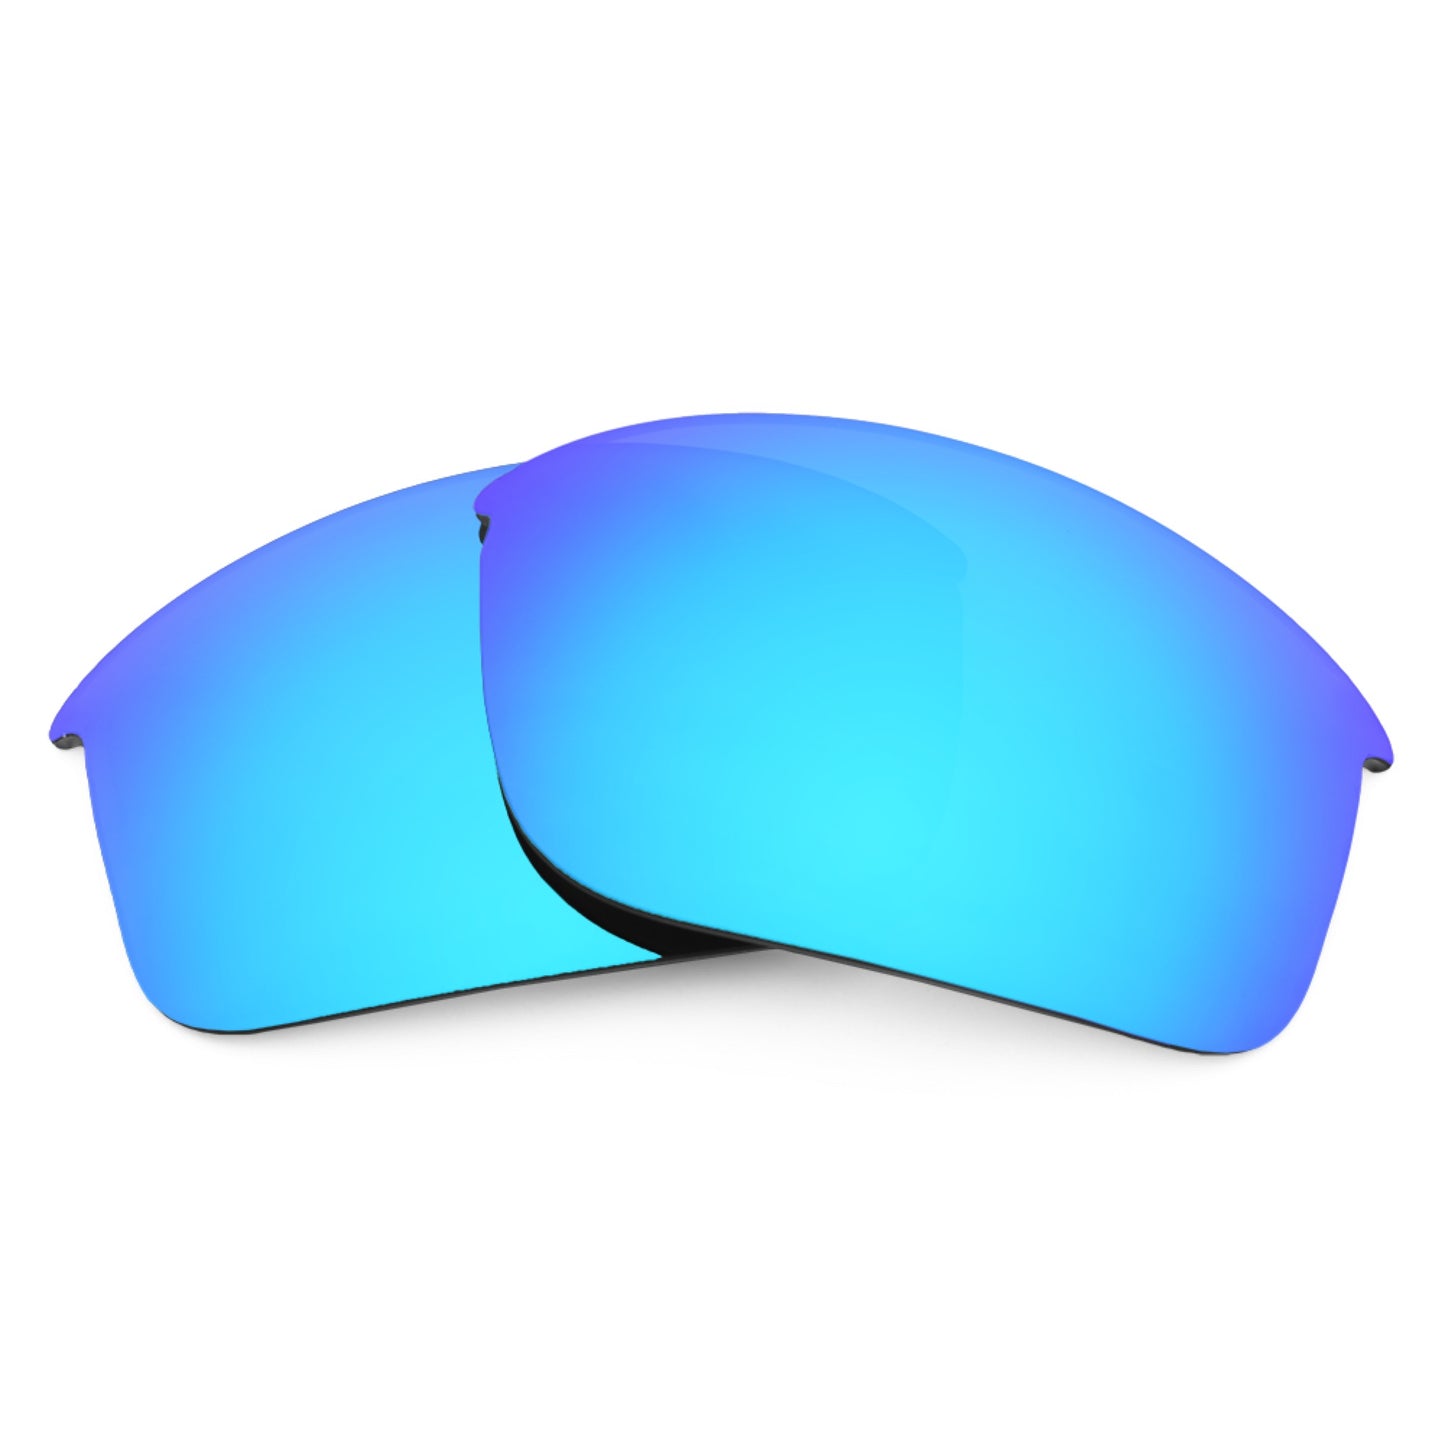 Revant replacement lenses for Costa Galveston Polarized Ice Blue